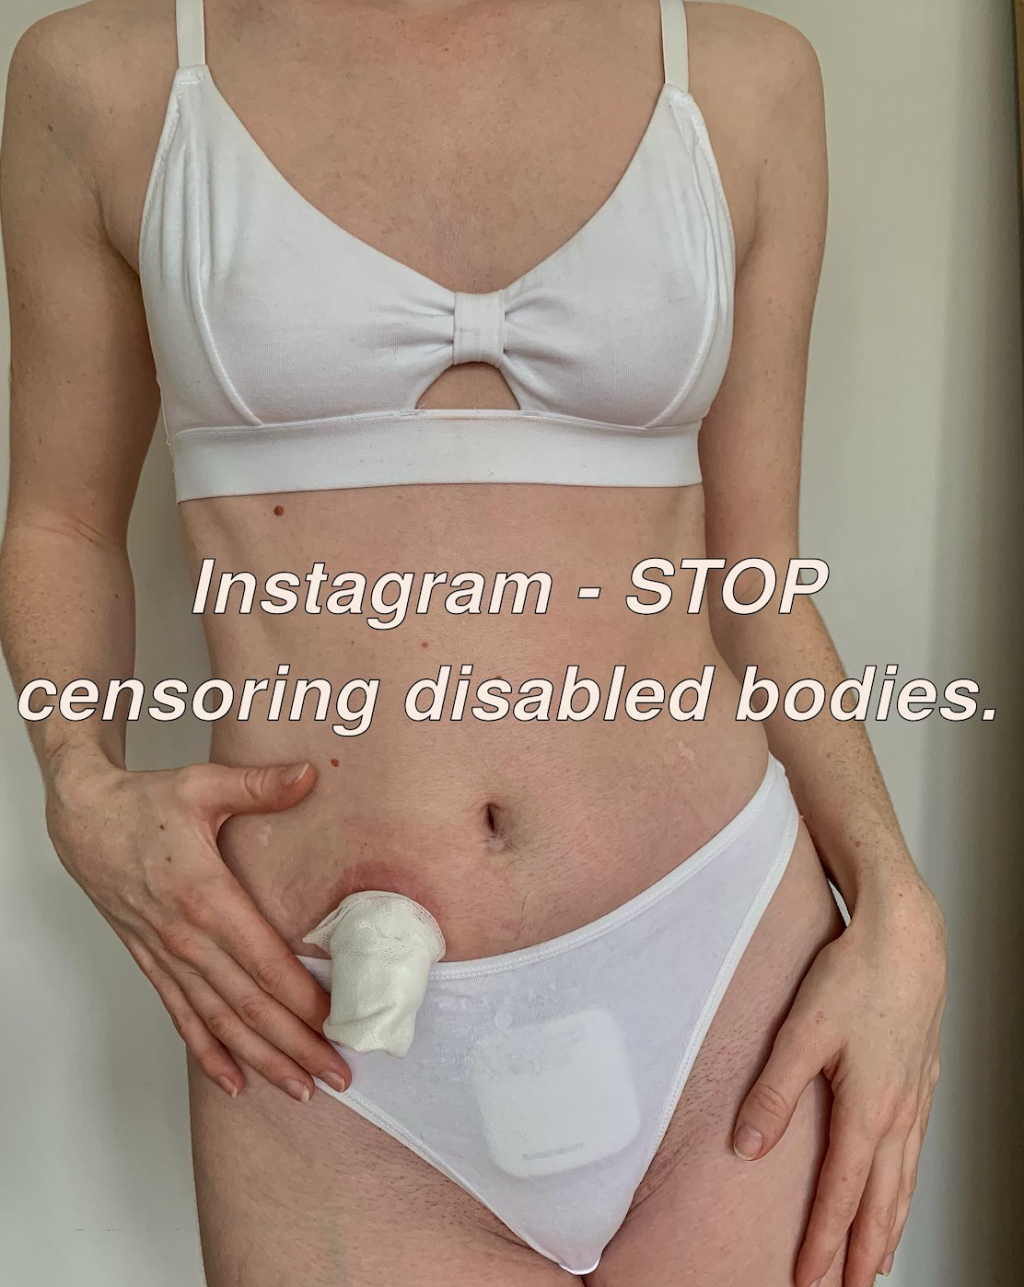 Instagram my body isn’t dangerous, so stop branding it as violent.